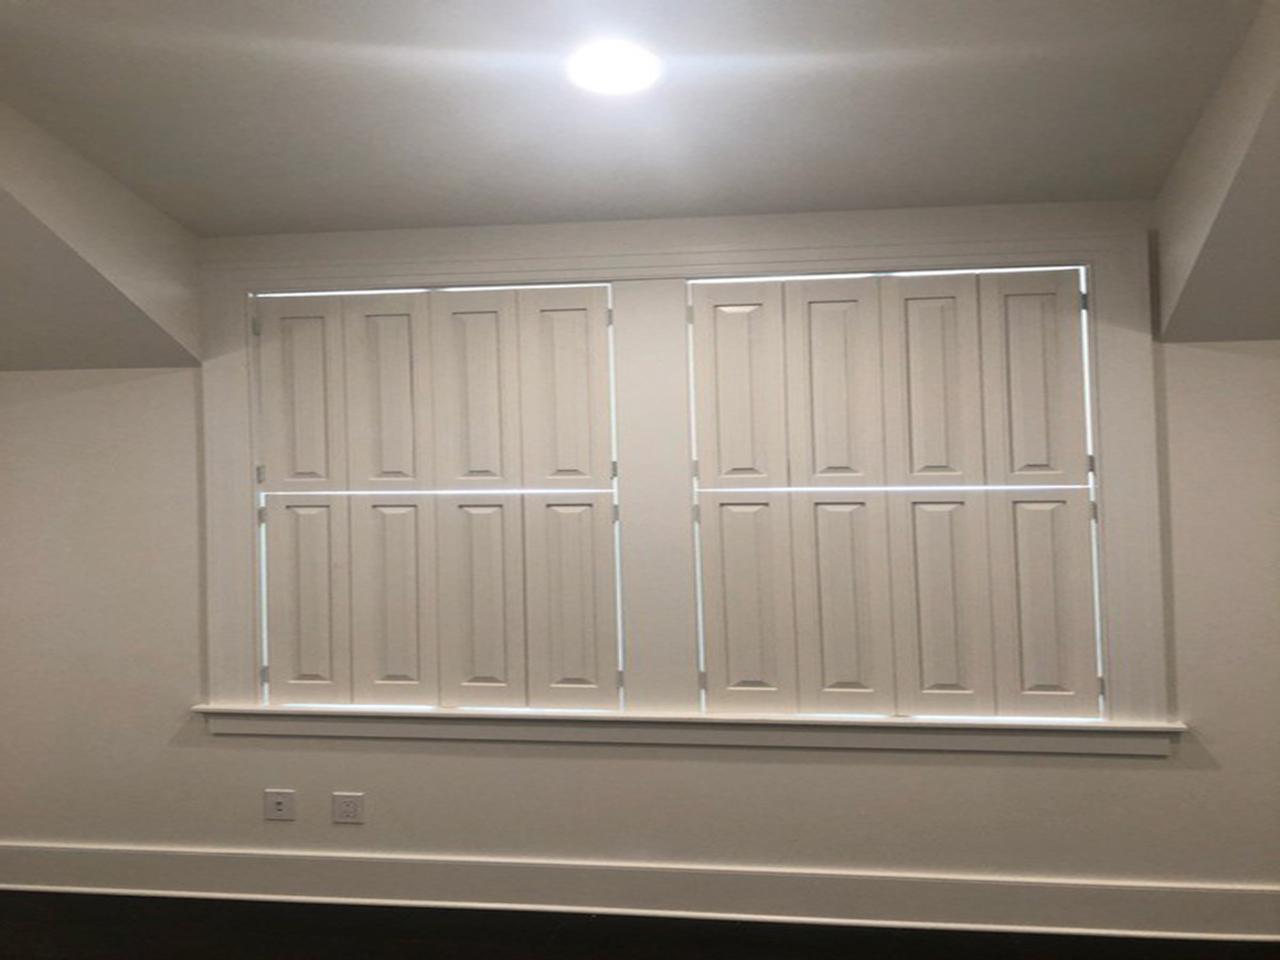 Raised panel shutters on a window